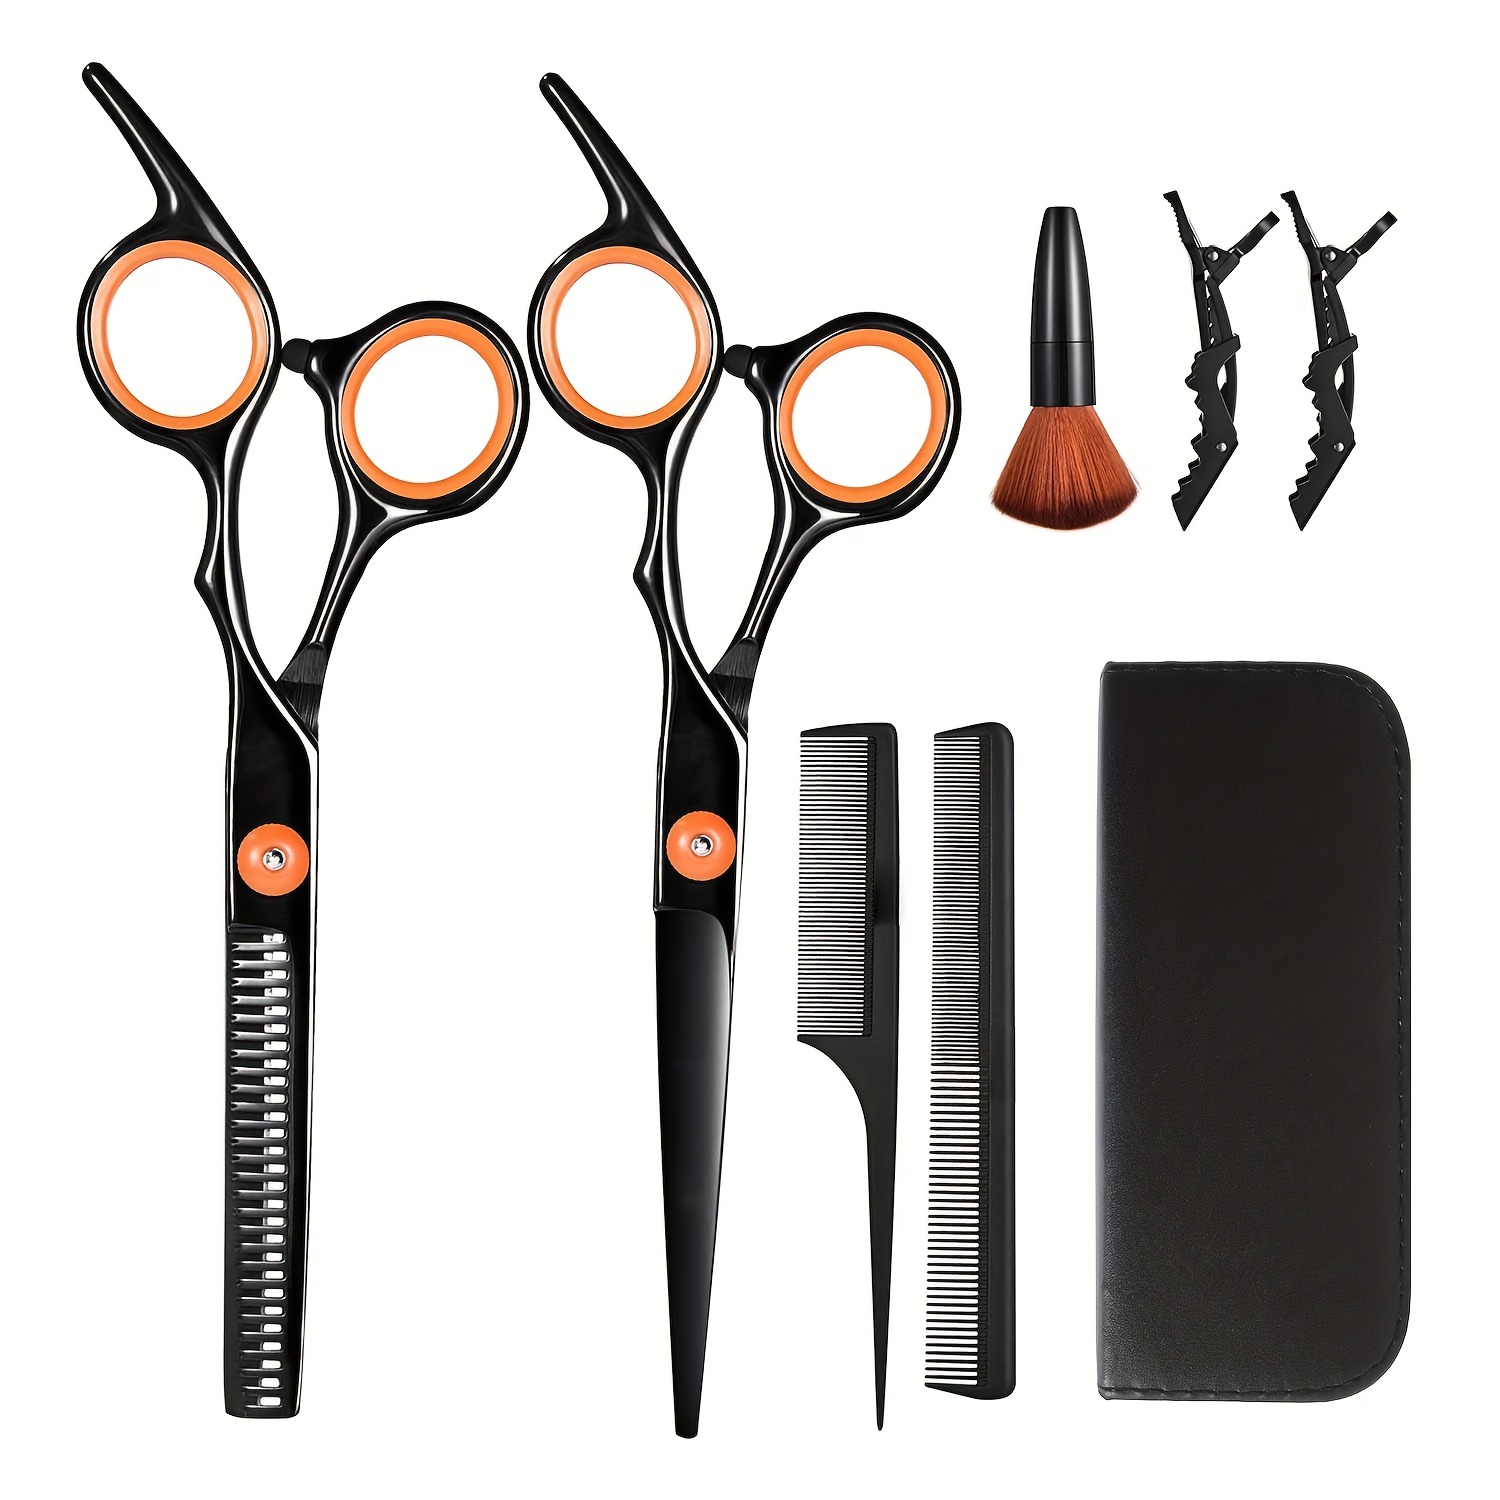 8pcs set professional hair cutting shears kit hair scissor hairdressing cutting thinning barber scissor set for men women pets details 1